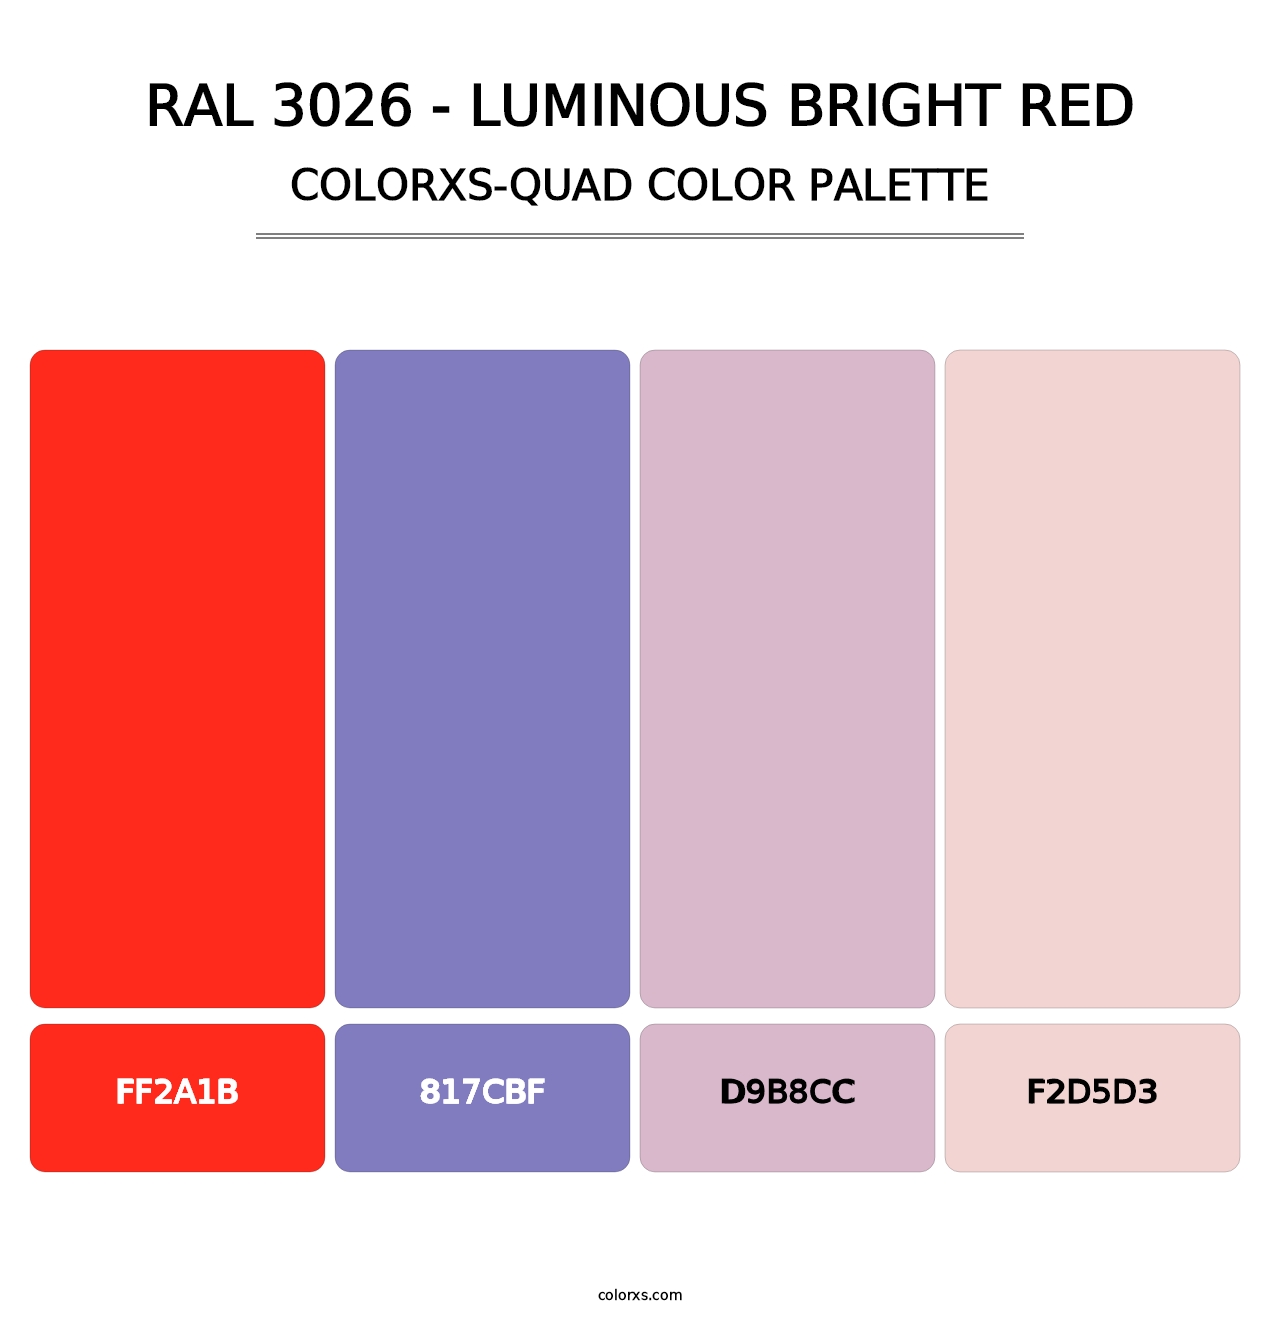 RAL 3026 - Luminous Bright Red - Colorxs Quad Palette